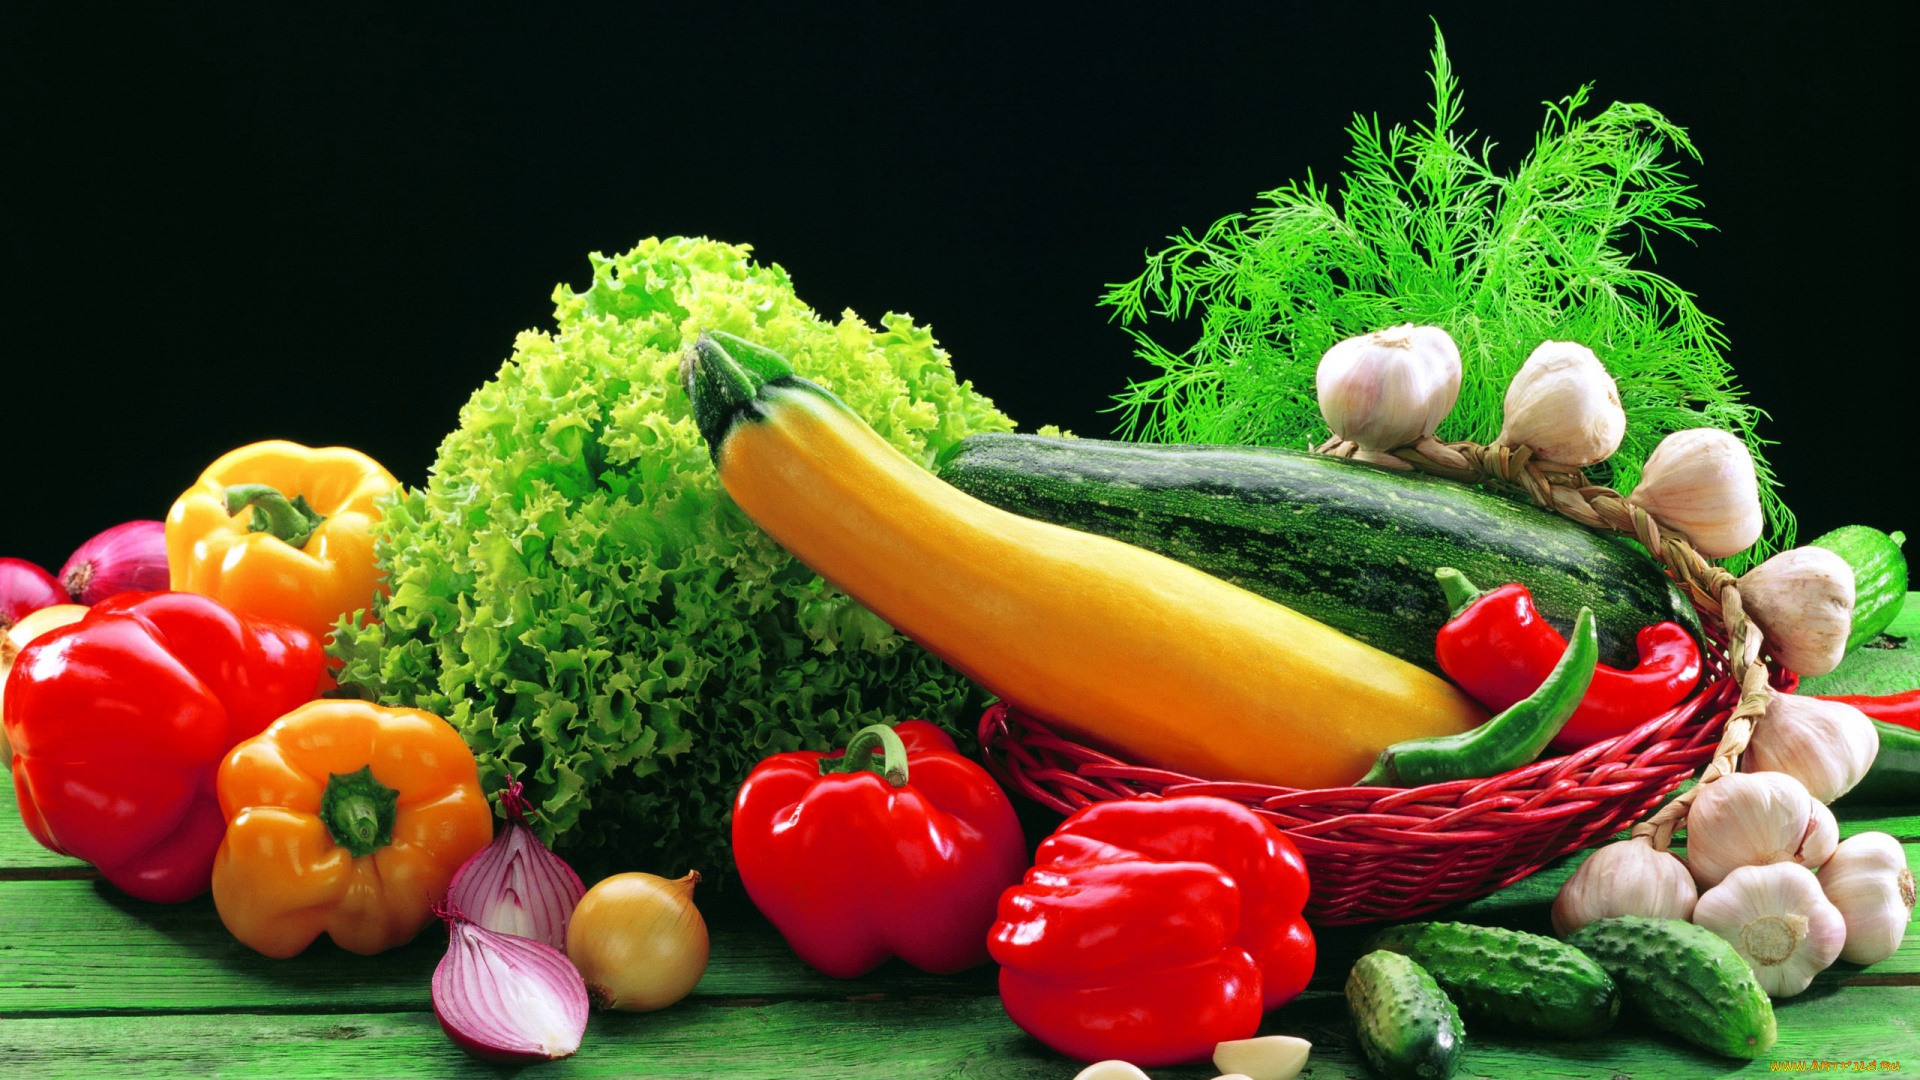 еда, овощи, кабачки, перец, лук, чеснок, огурцы, зелень